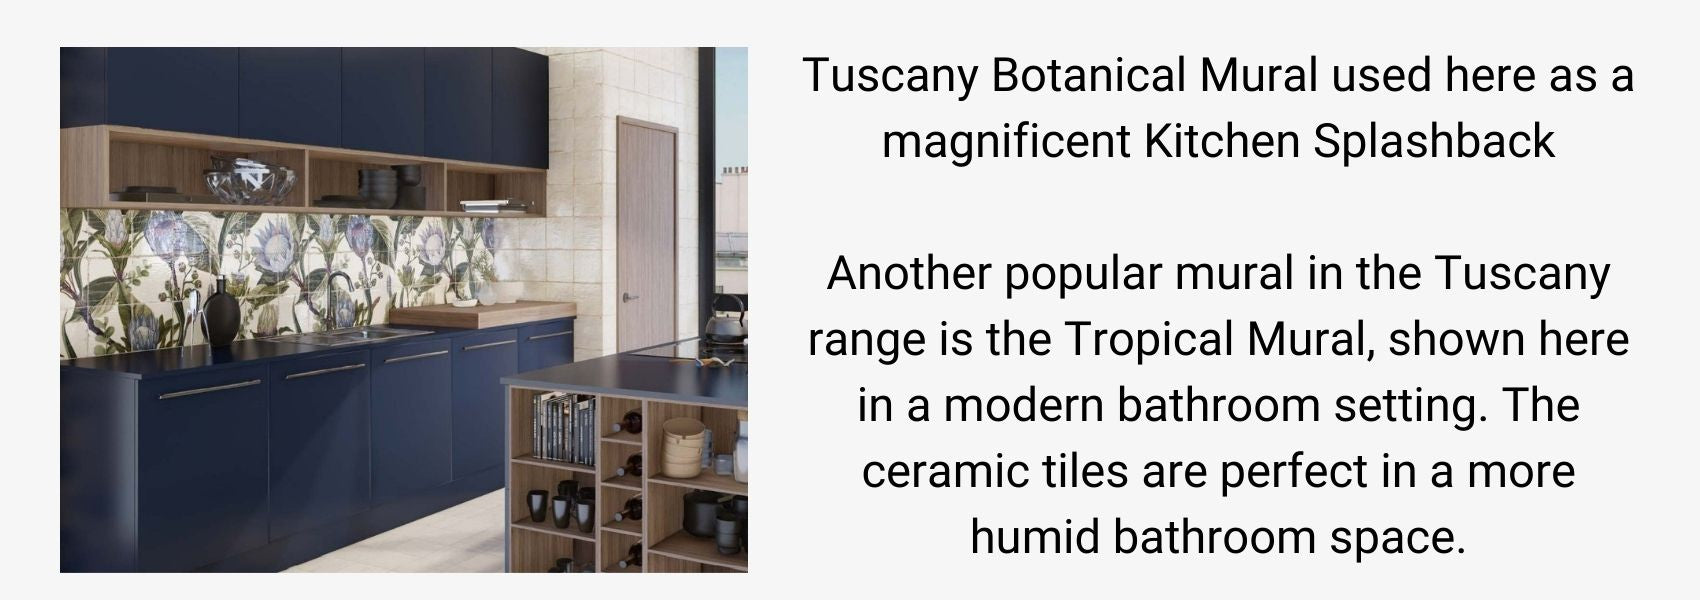 Tuscany botanical Mural